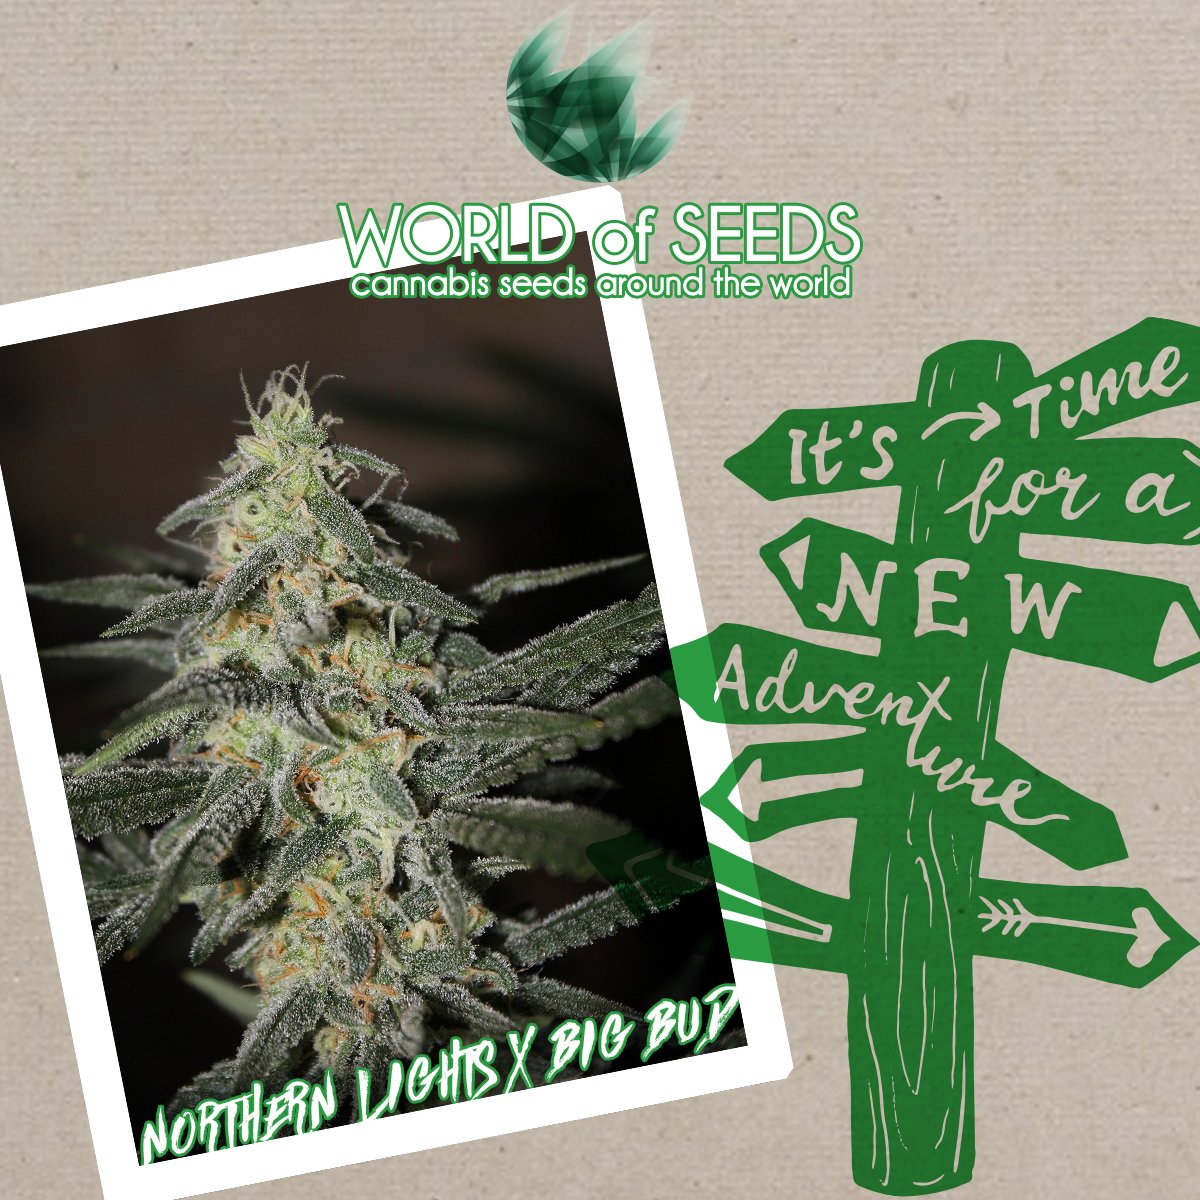 Northern Lights x Big Bud! 🛣🗺#CannabisSeedsAroundTheWorld 💚🌱 #NorthernLightsXBigBud #WorldofSeeds #WoS #CannabisStrains #CannabisSeeds #Seedsbank #cannabisseedsbank #indica #indicastrain #cannabisindica #weedstagram #weedporn #weedplant